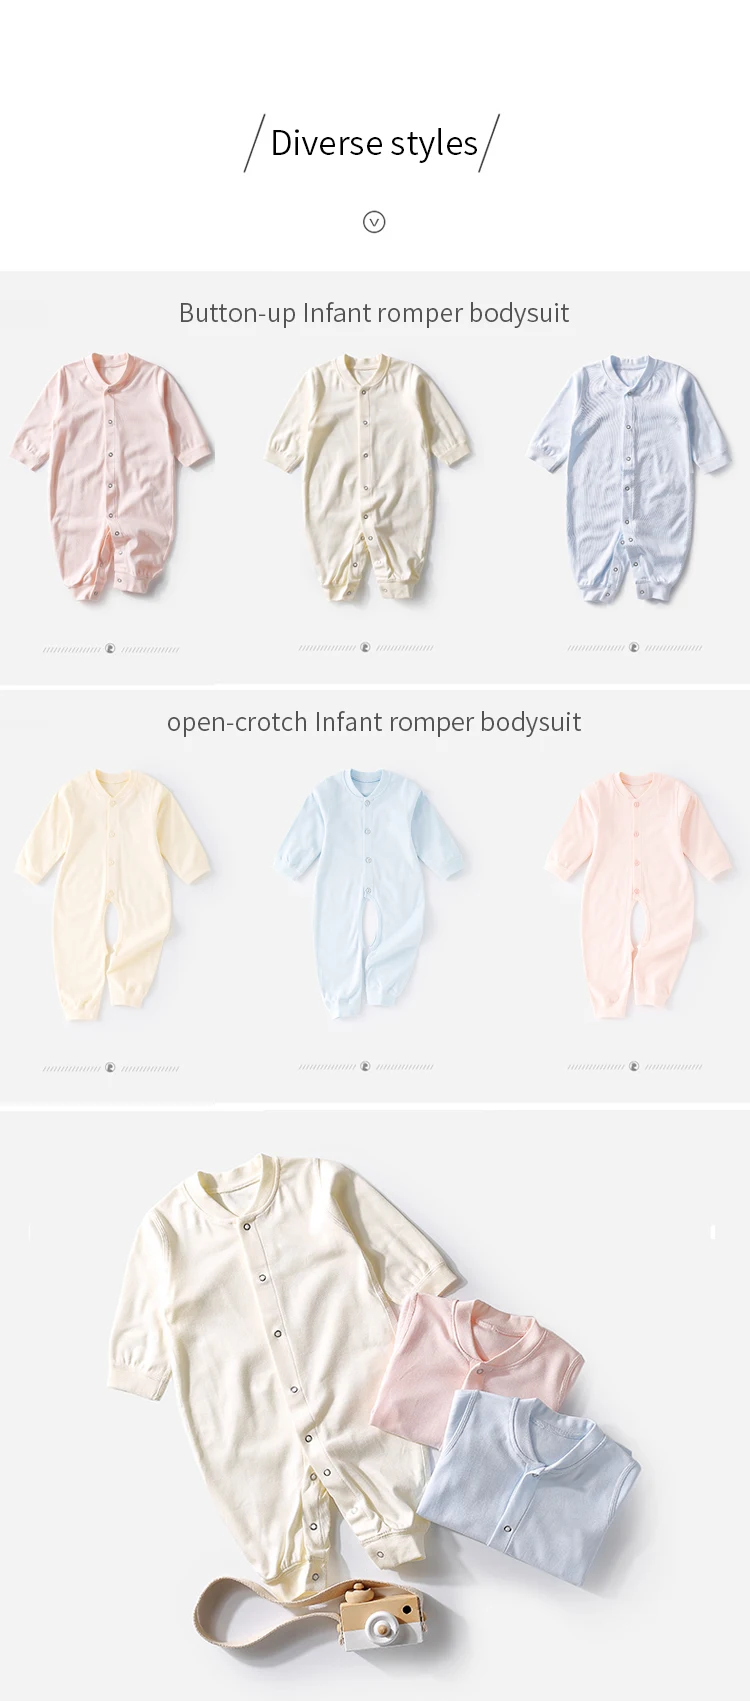 Enerup 2020 100% PLA biodegradable soft as organic cotton knit new born baby clothes clothing romper jumpsuit set